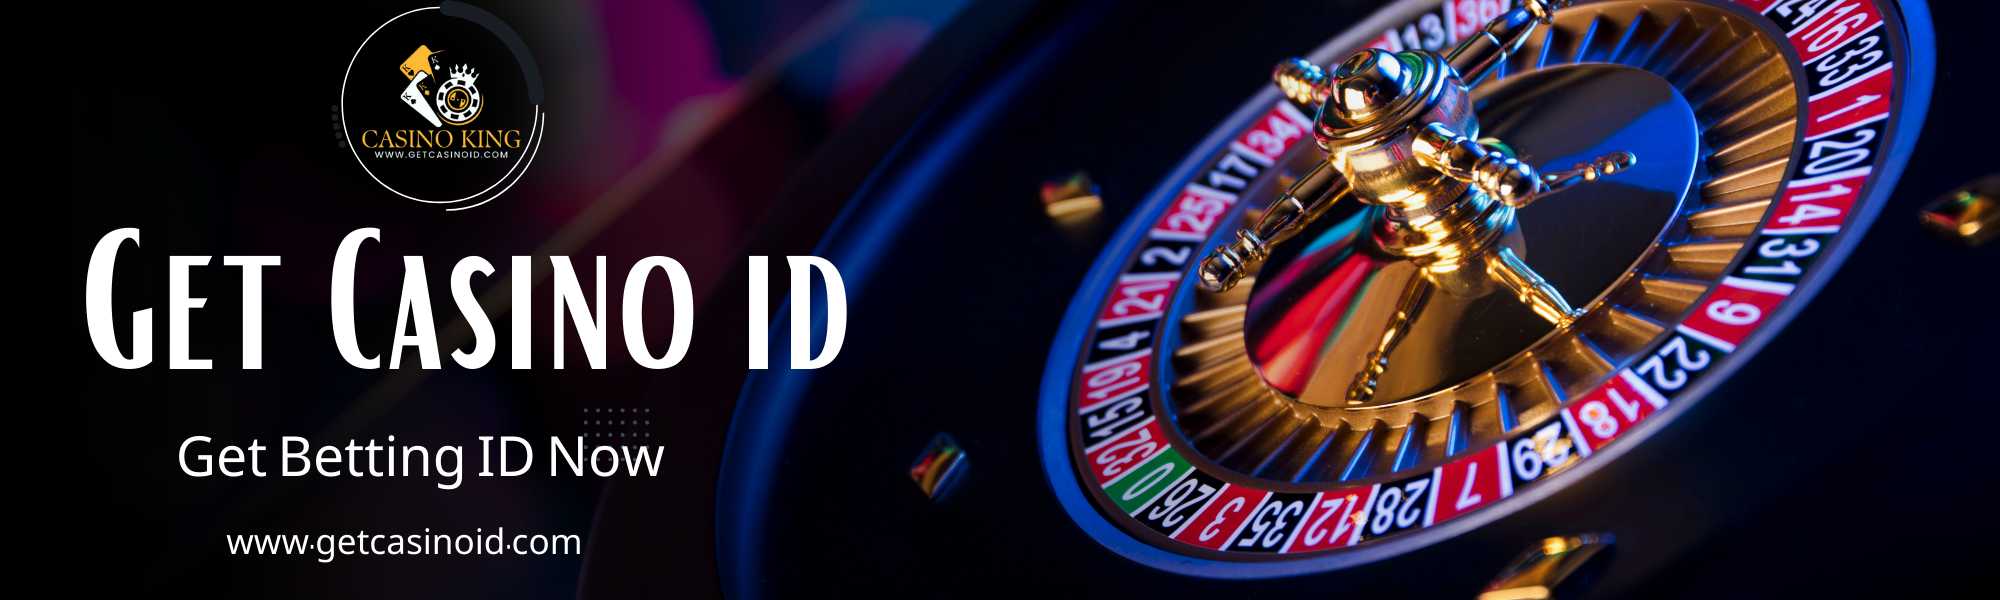 get casino Cover Image